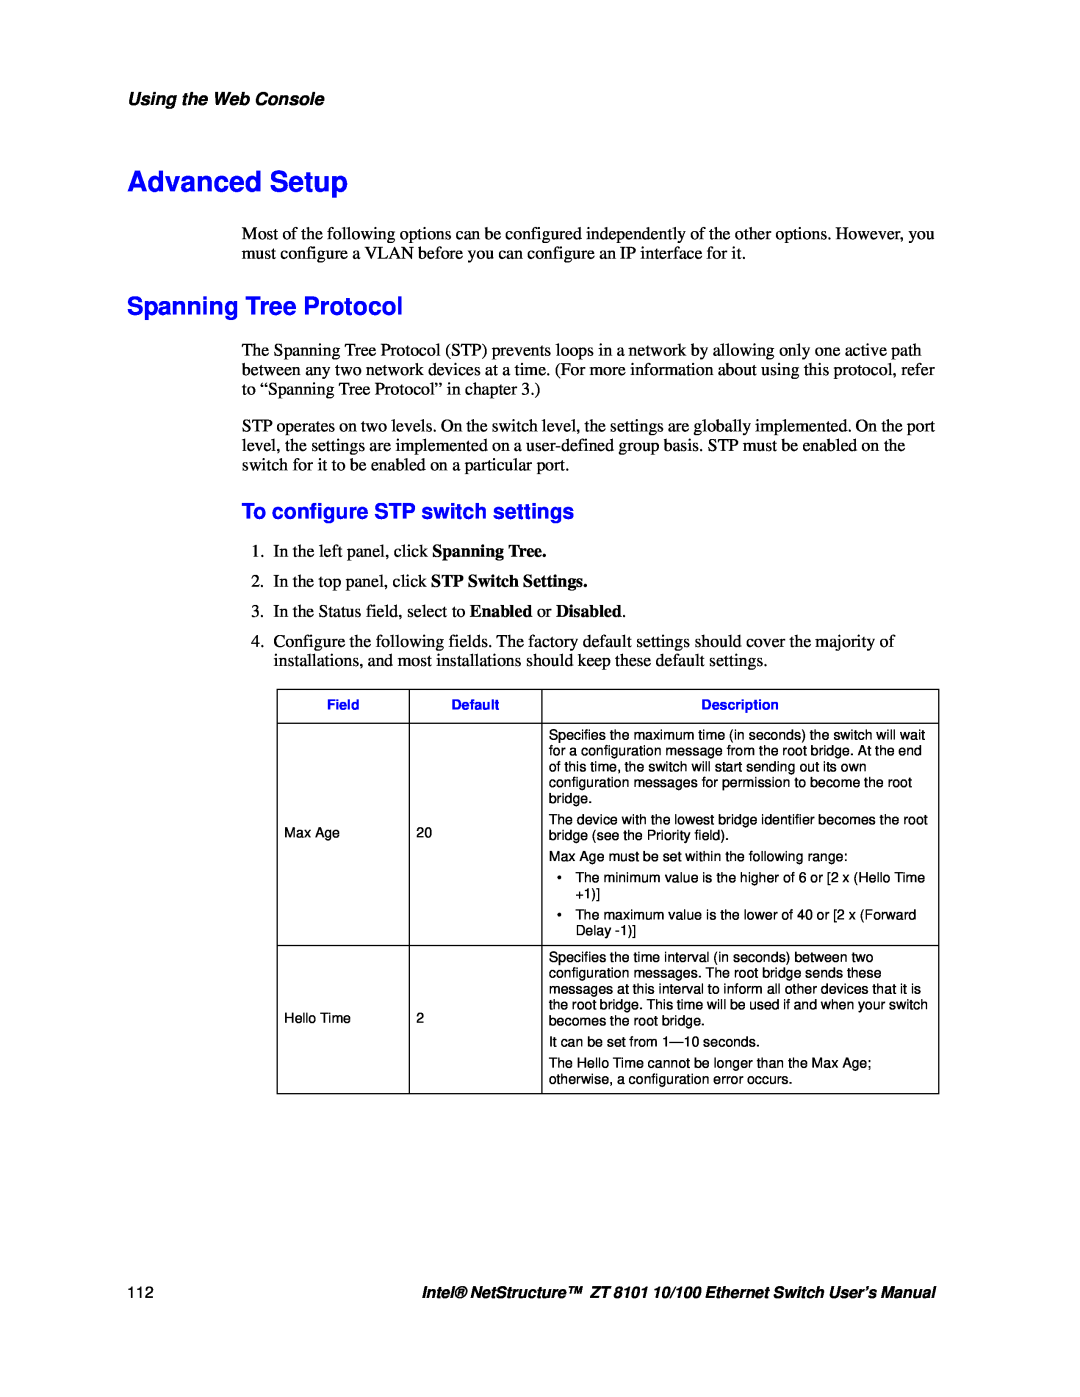 Intel ZT 8101 10/100 Spanning Tree Protocol, To configure STP switch settings, Advanced Setup, Using the Web Console 